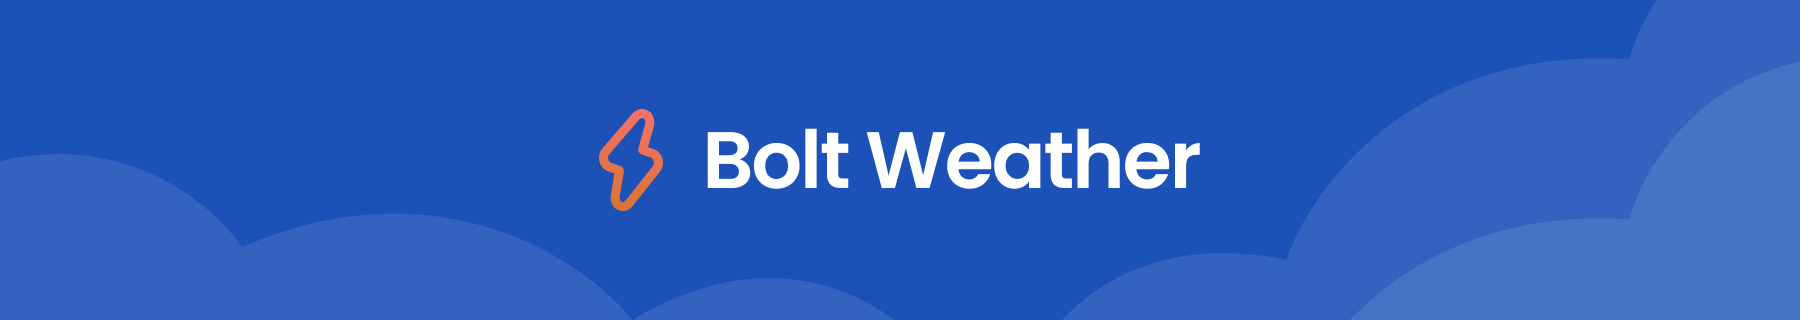 Bolt Weather Banner